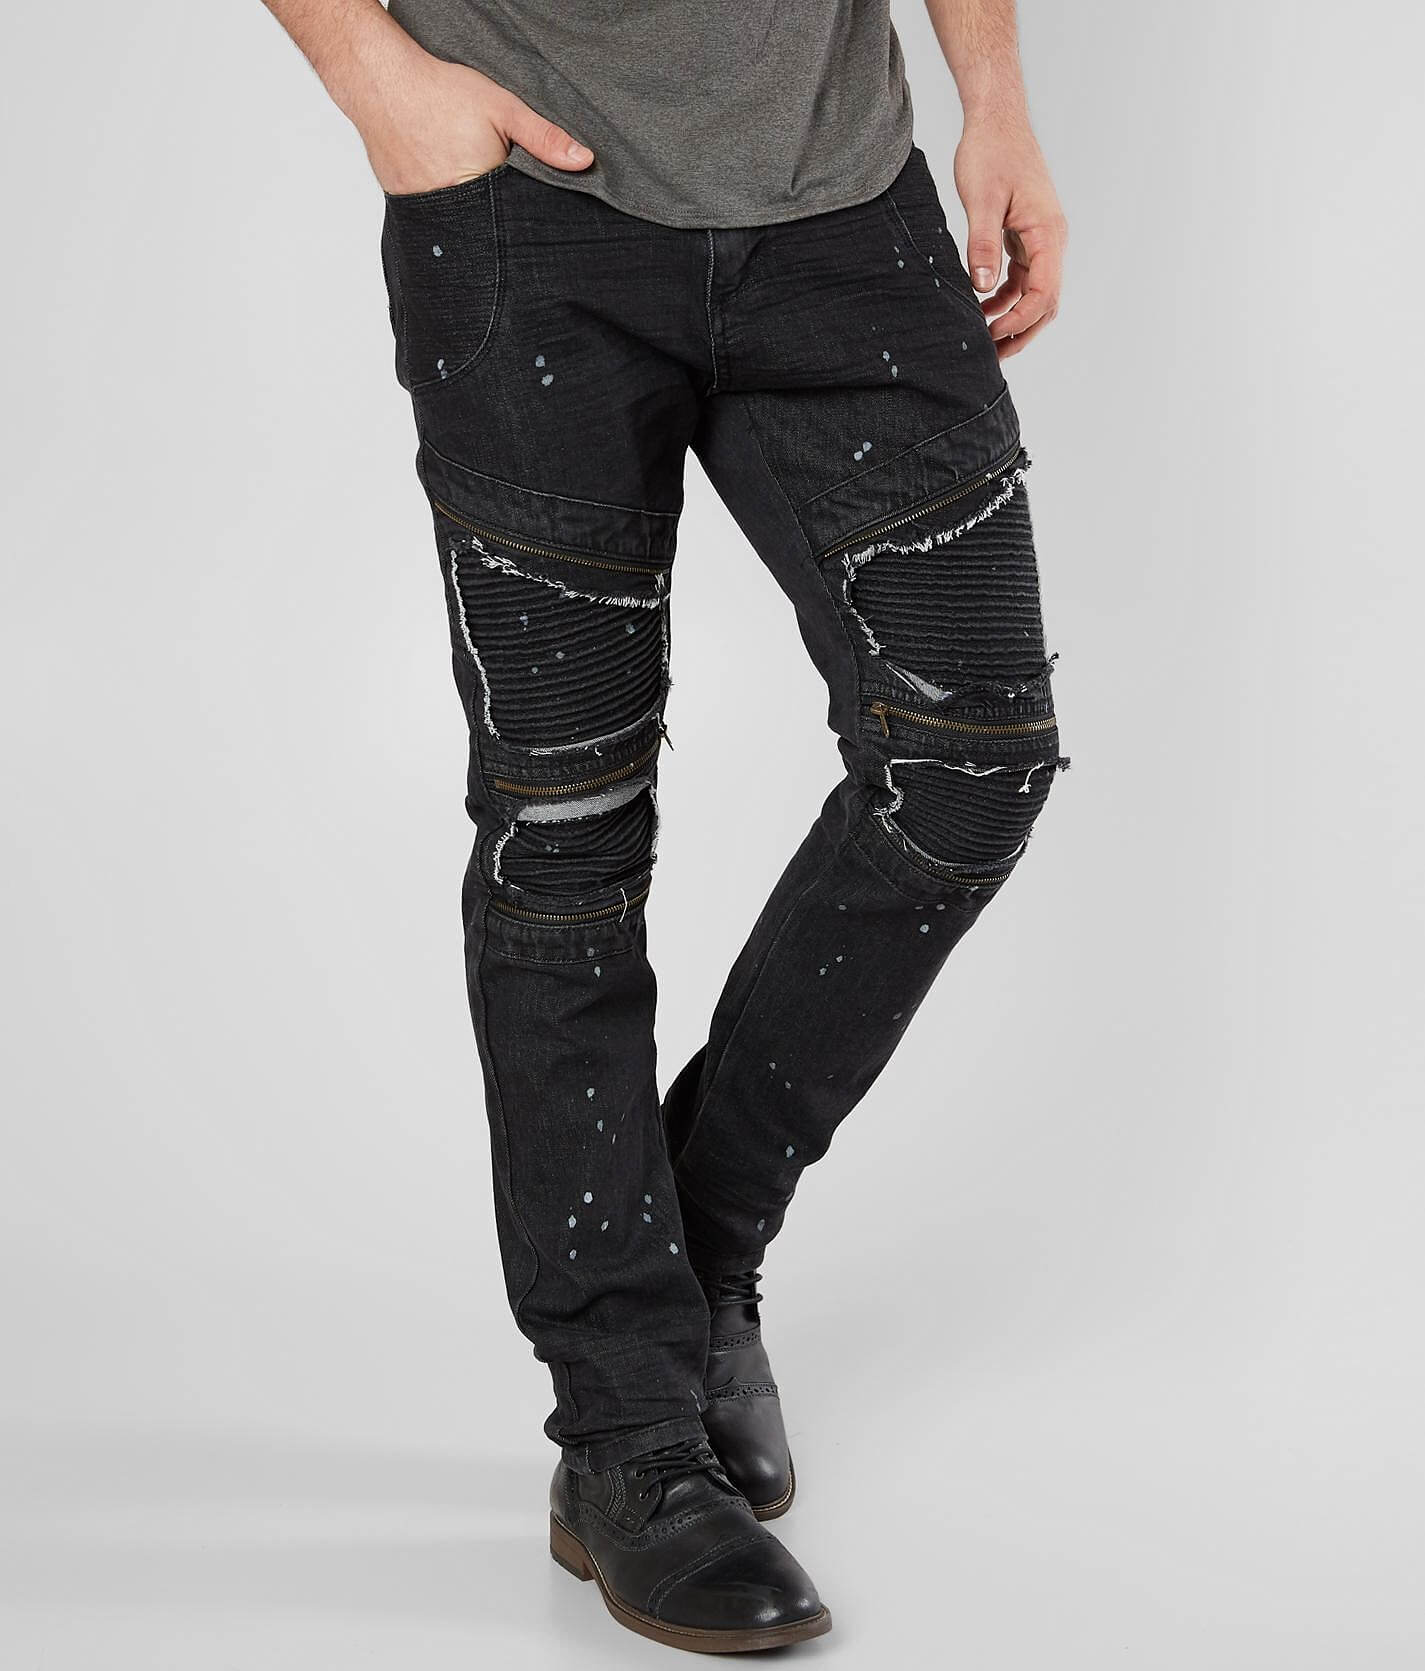 dark black ripped jeans